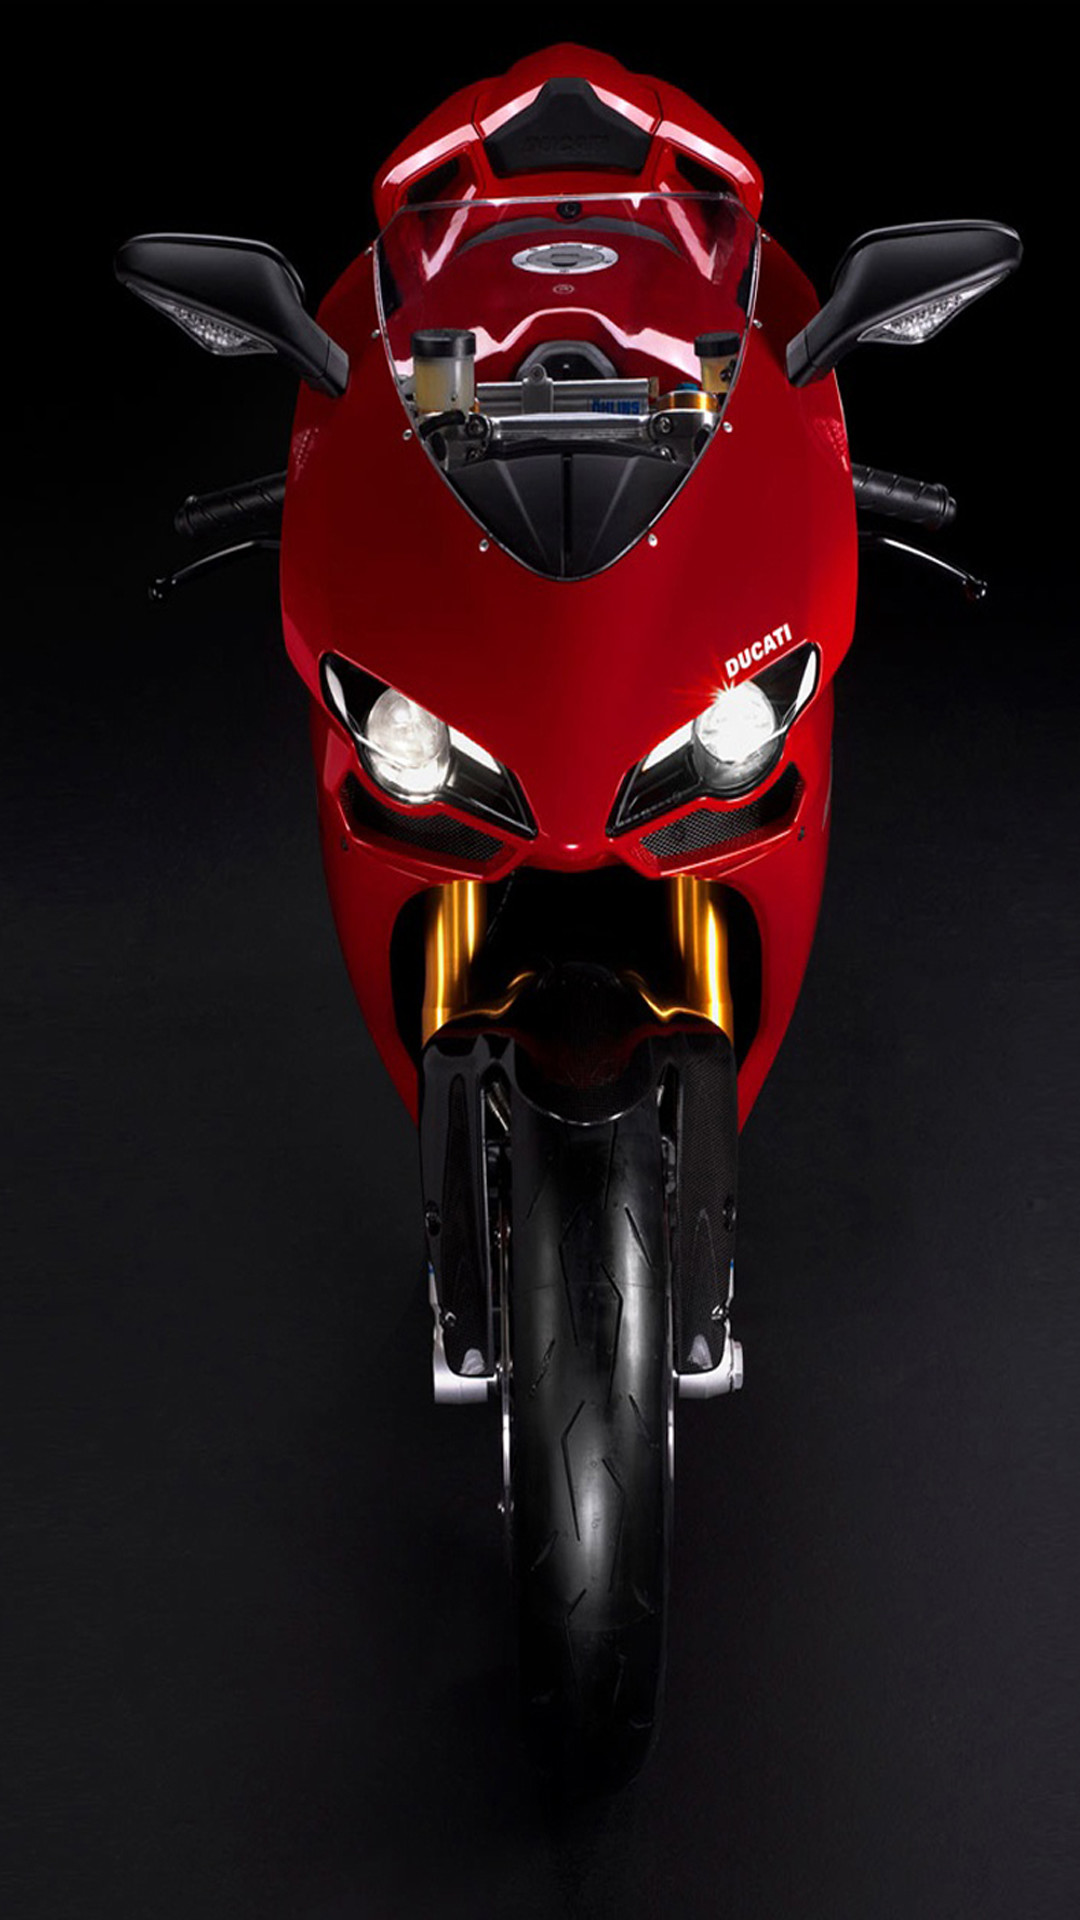 1080x1920 Ducati 1198 Superbike Red iPhone 6 Plus HD Wallpaper